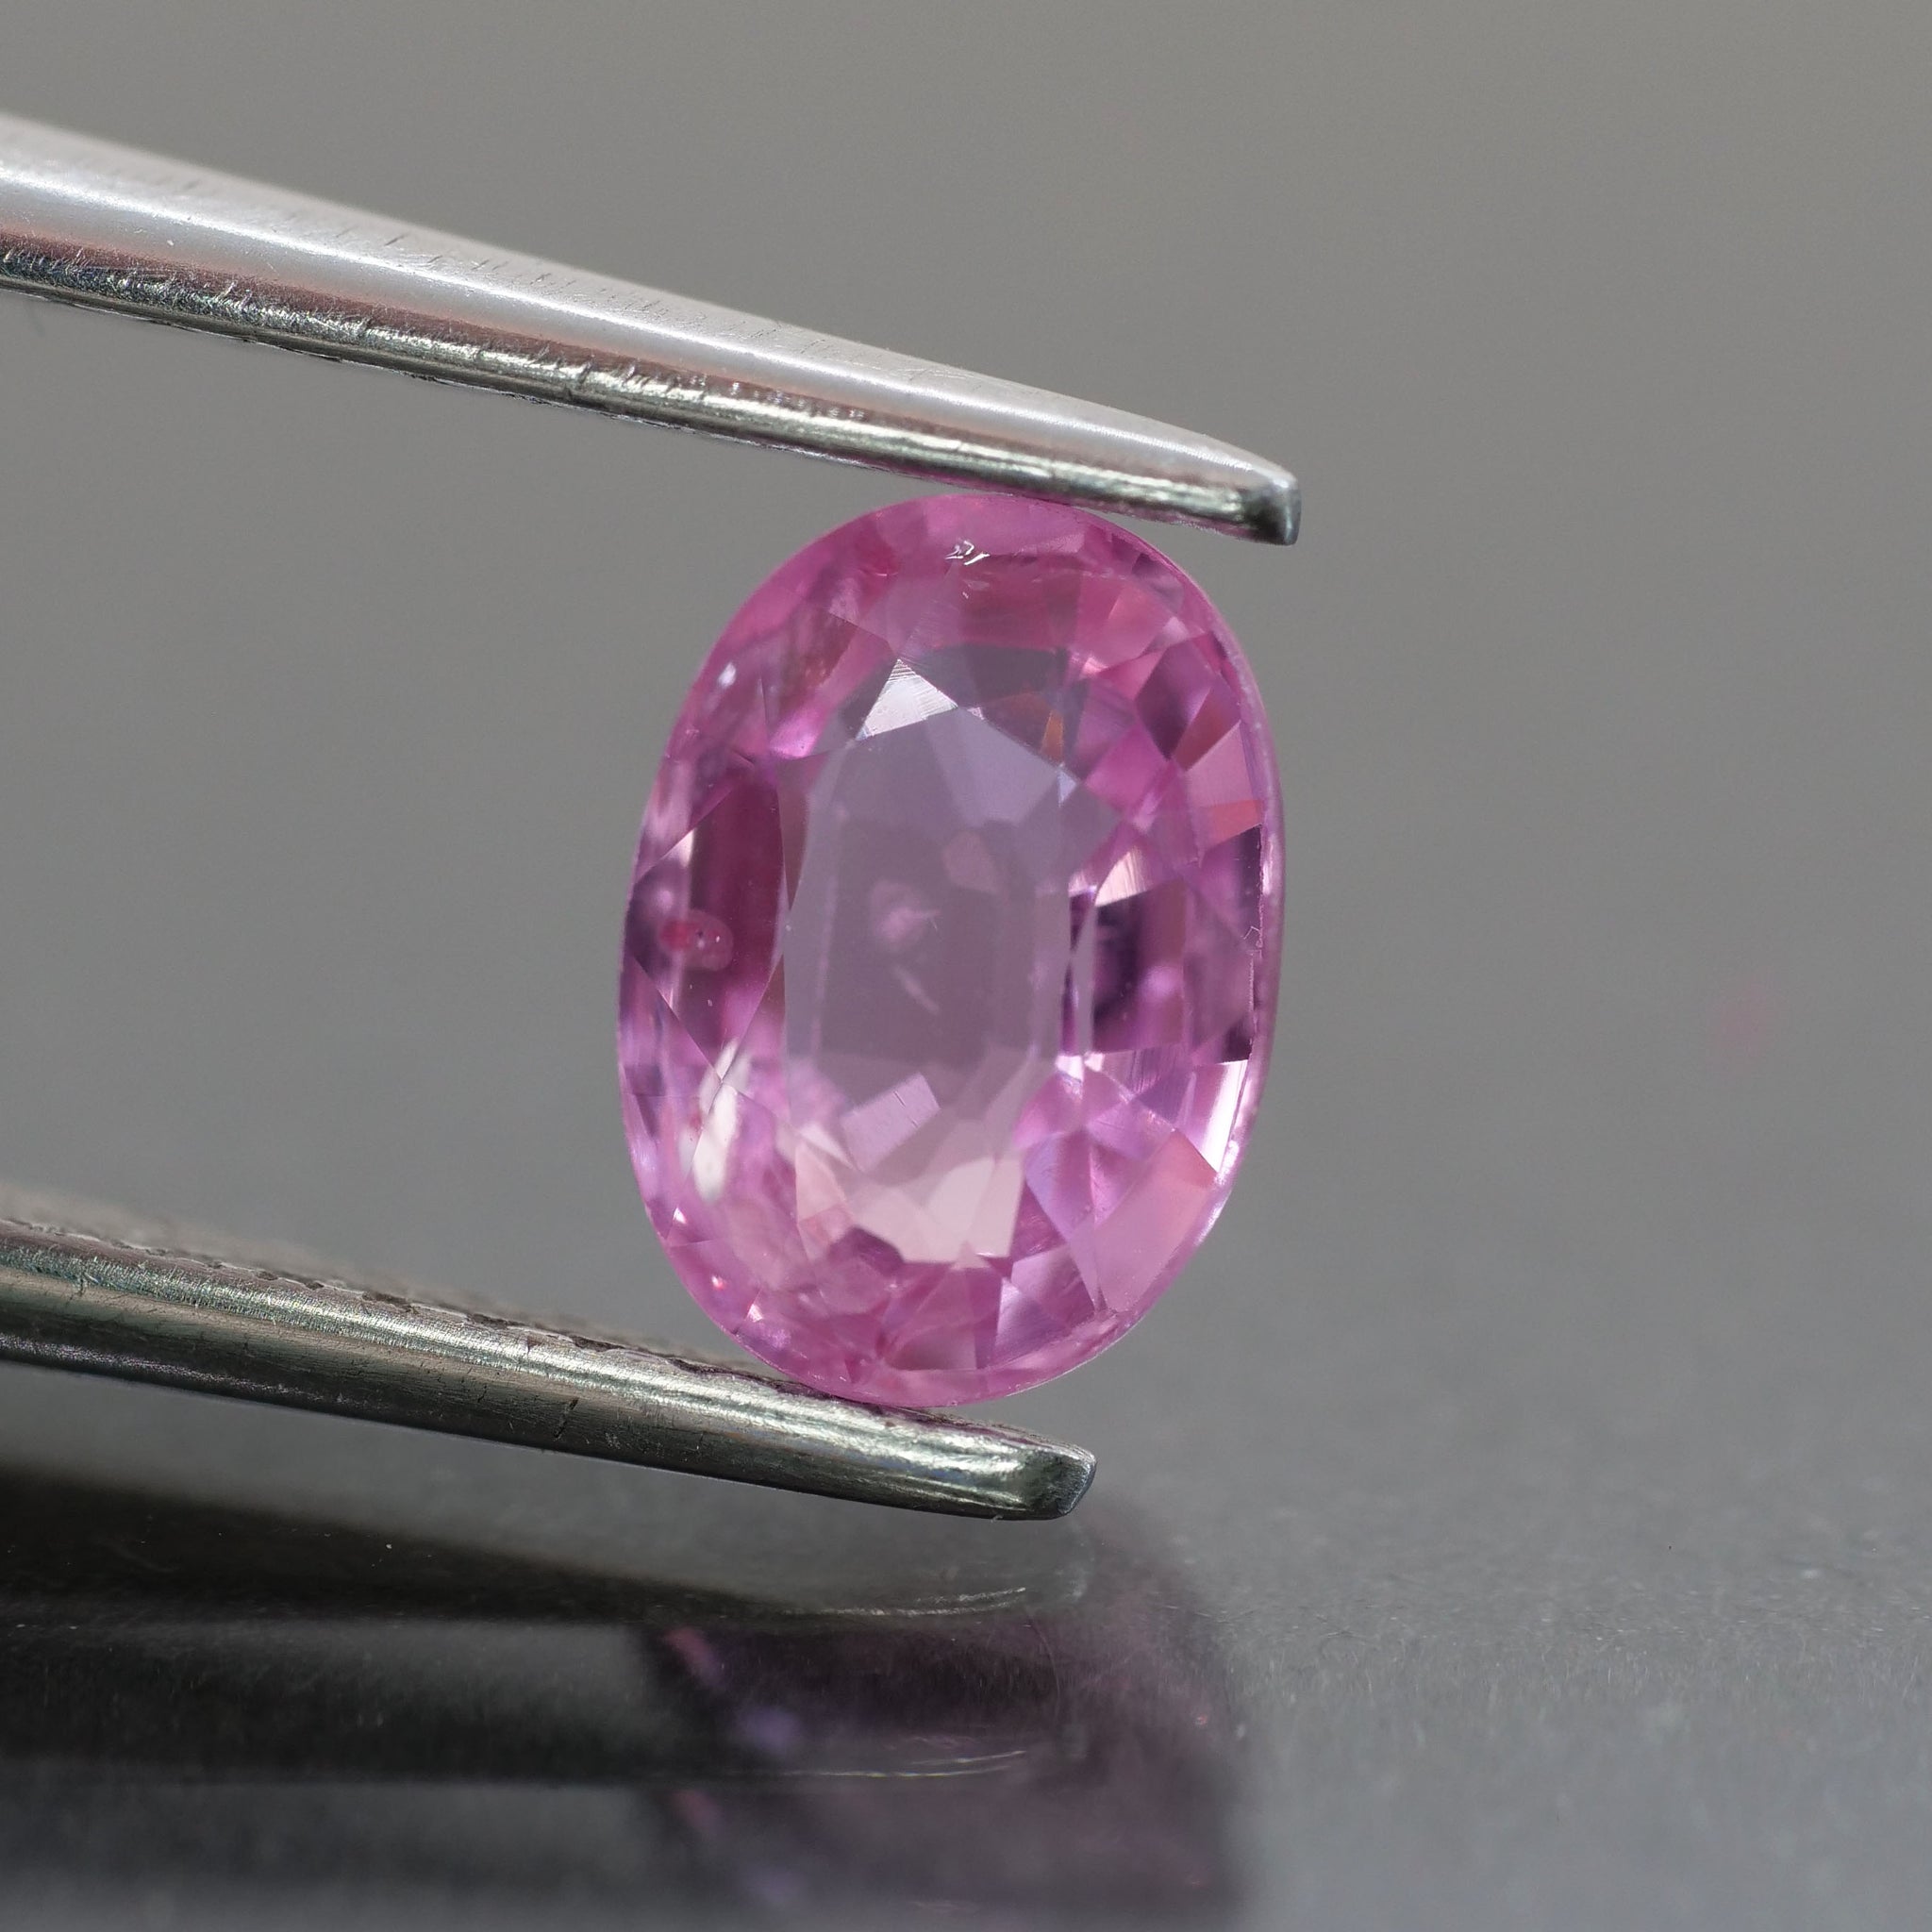 Sapphire | natural, pink, oval cut 7x5 mm, 1.08ct, Mozambique - Eden Garden Jewelry™